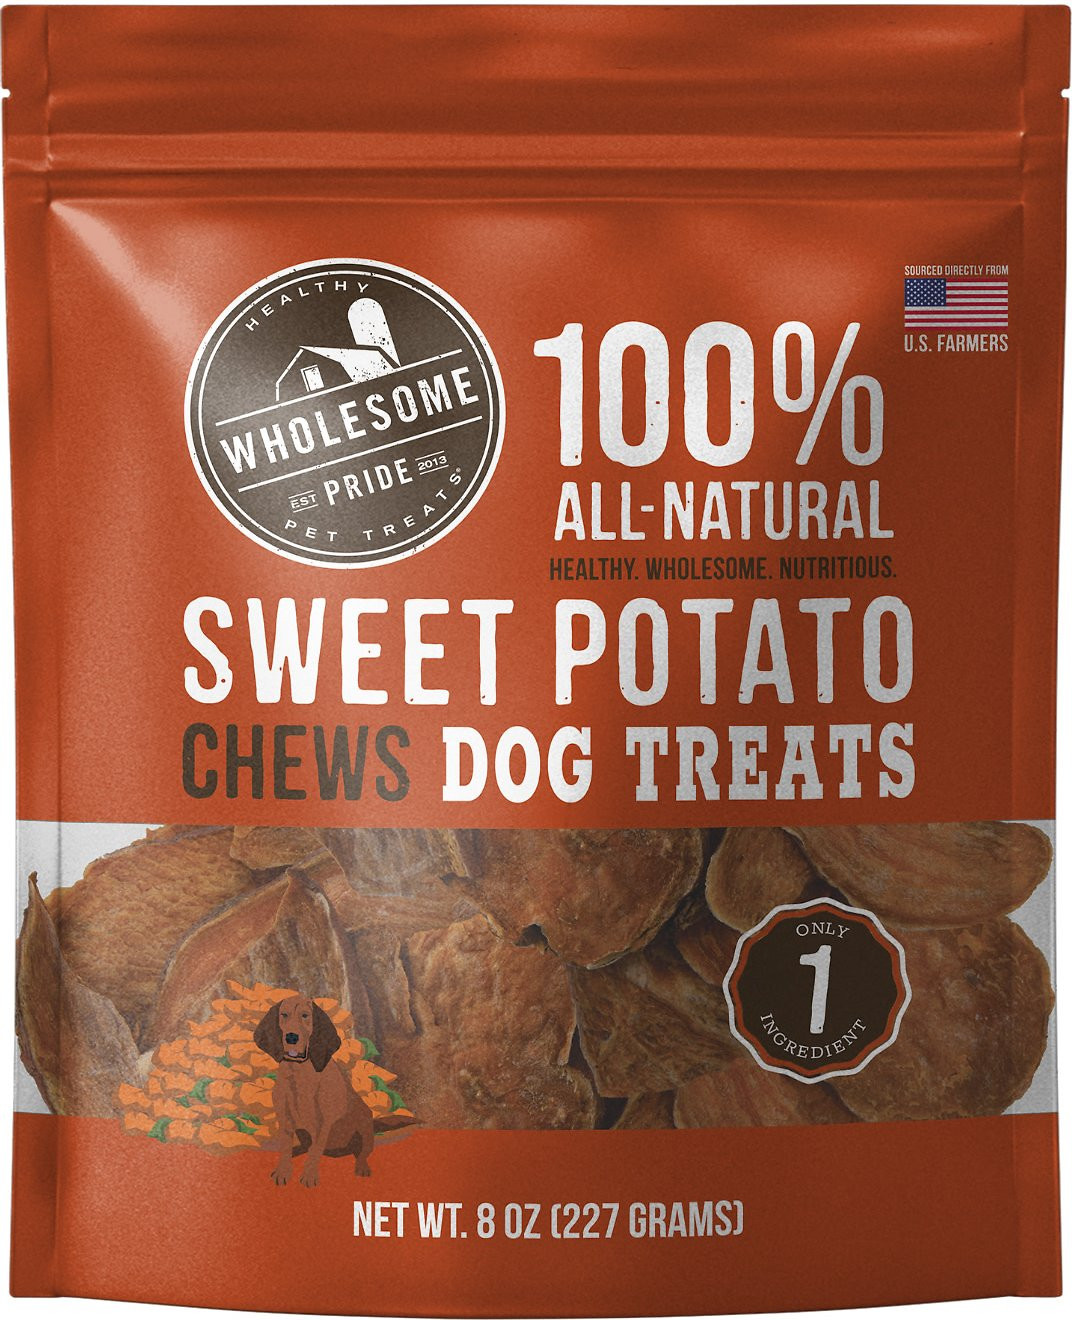 Sweet Potato Dog Treats
 Wholesome Pride Pet Treats Sweet Potato Chews Dog Treats